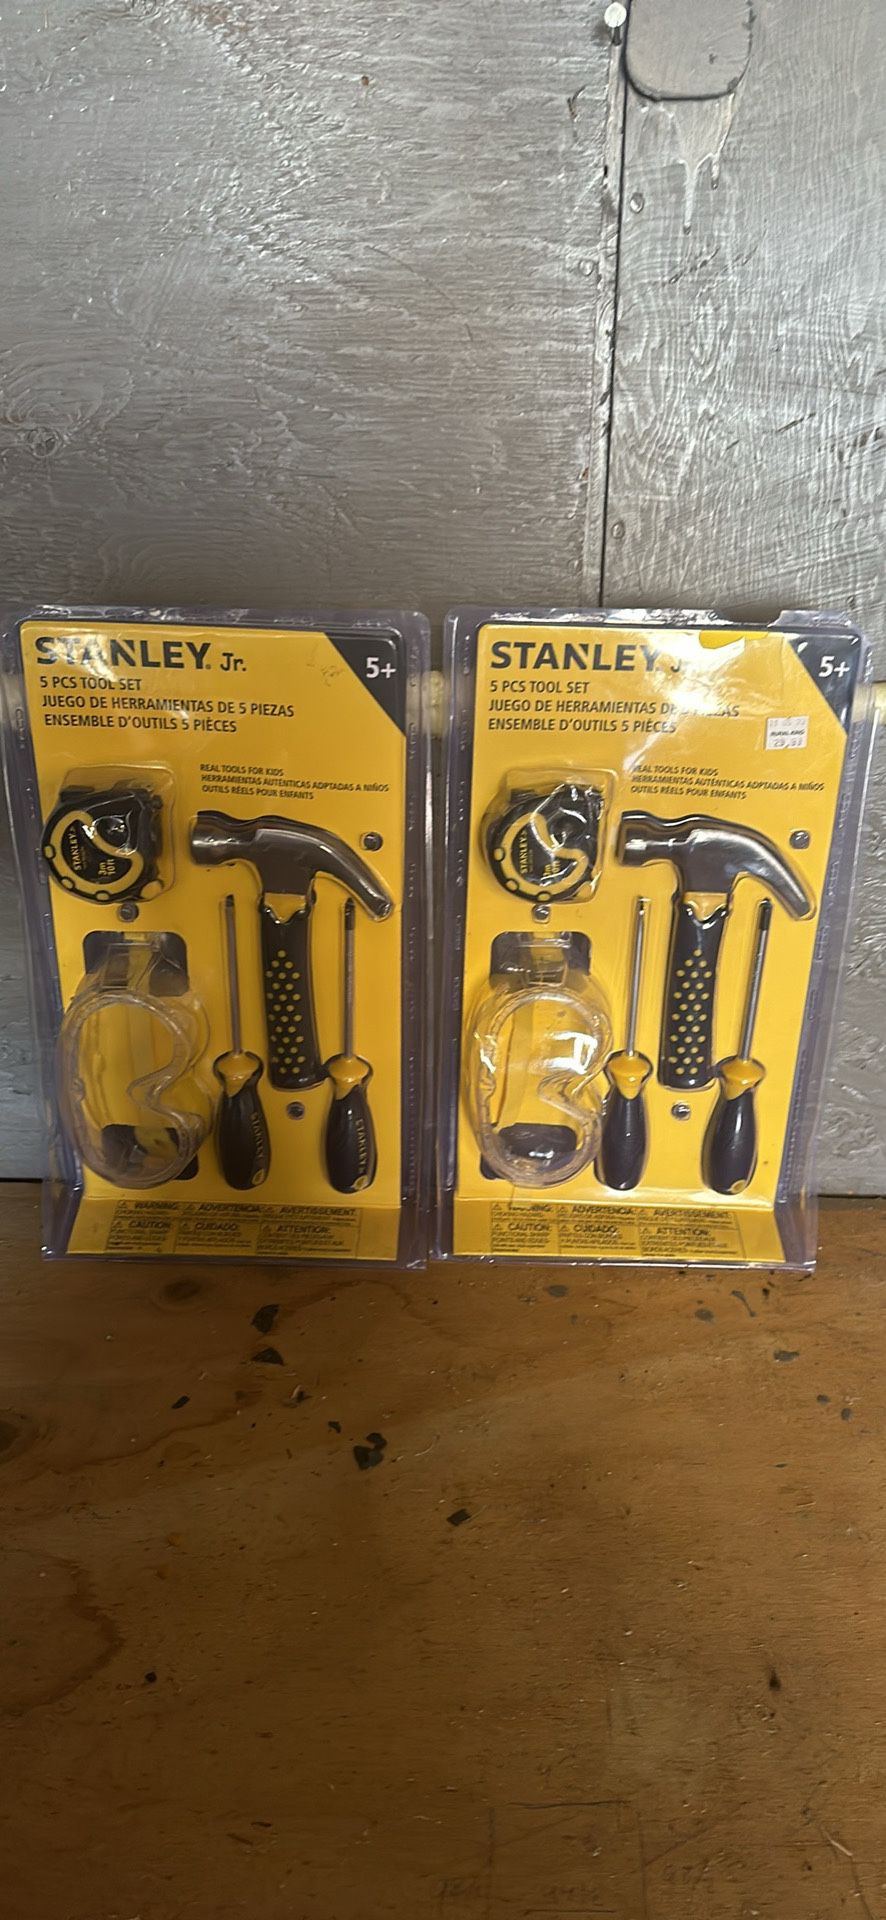 2 Stanley Jr Tool Sets 